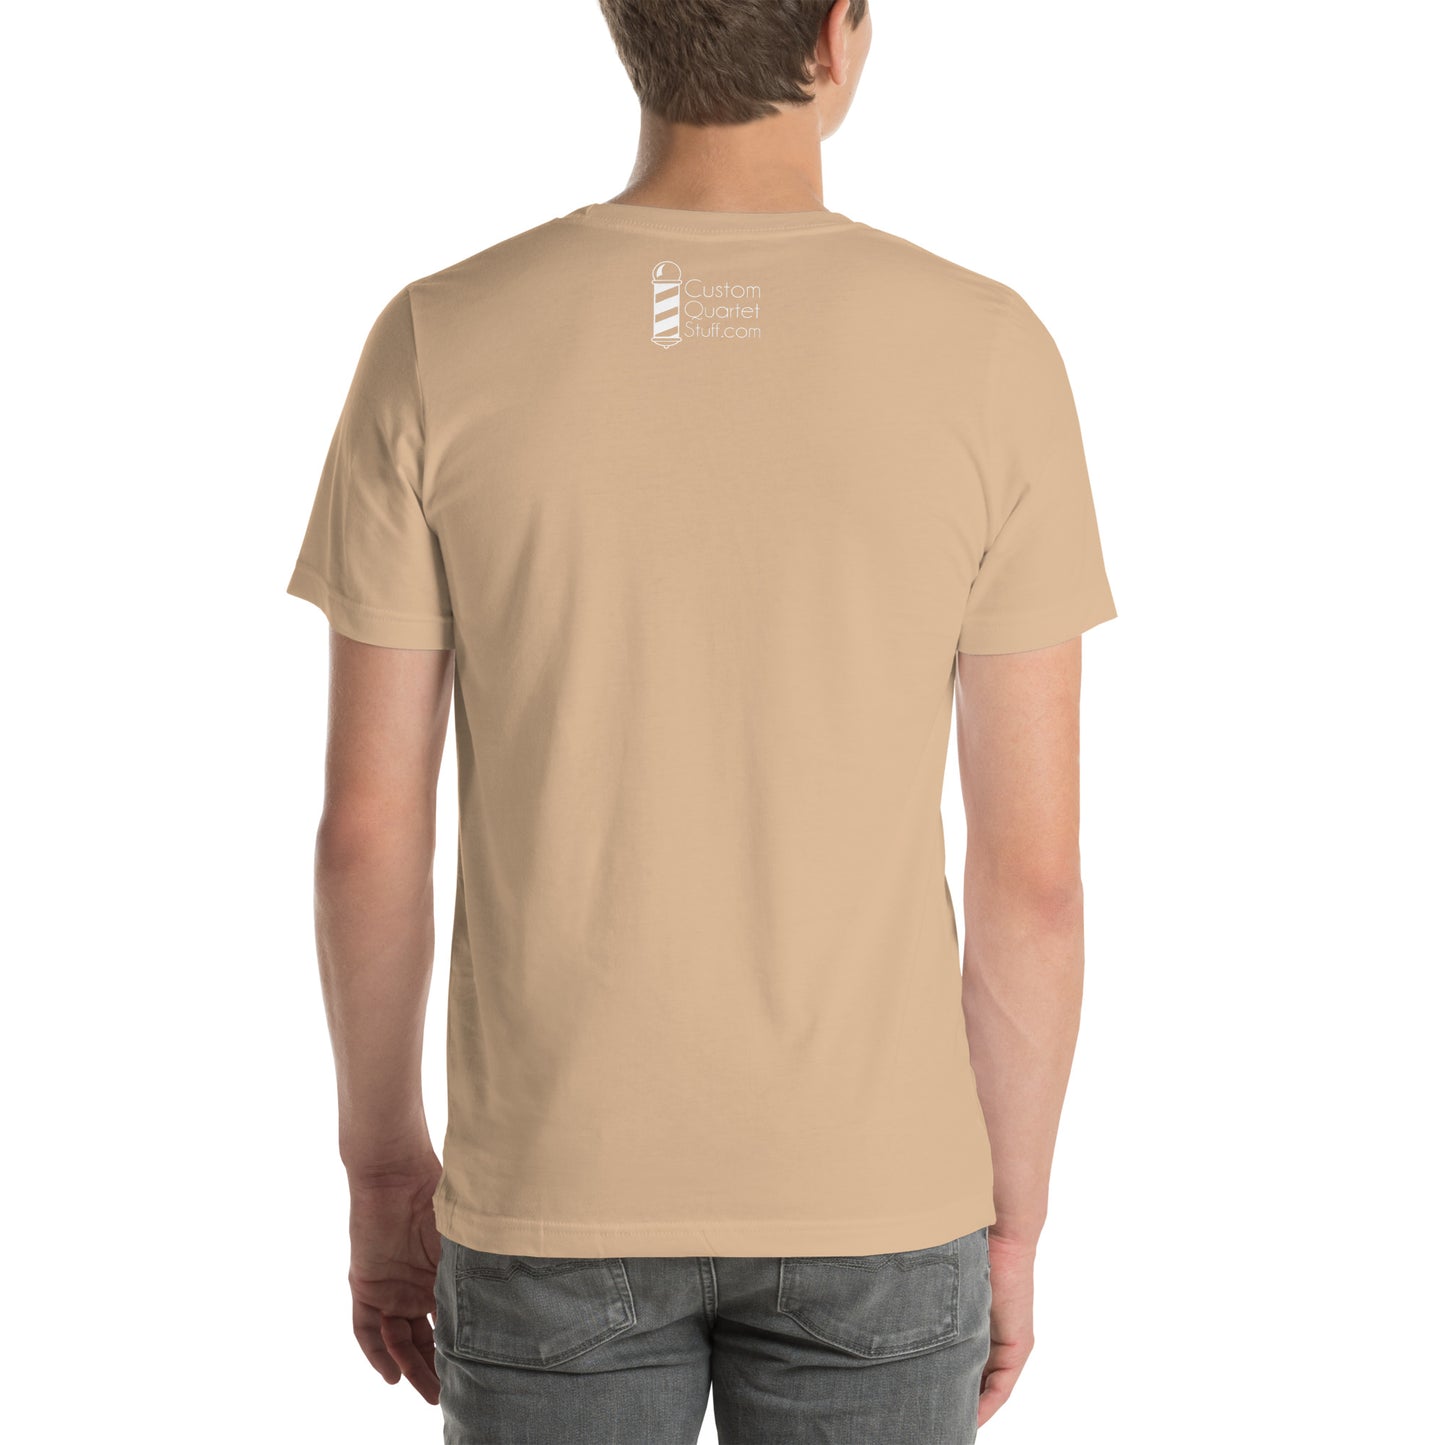 SHD Printed - Regular fit Unisex t-shirt